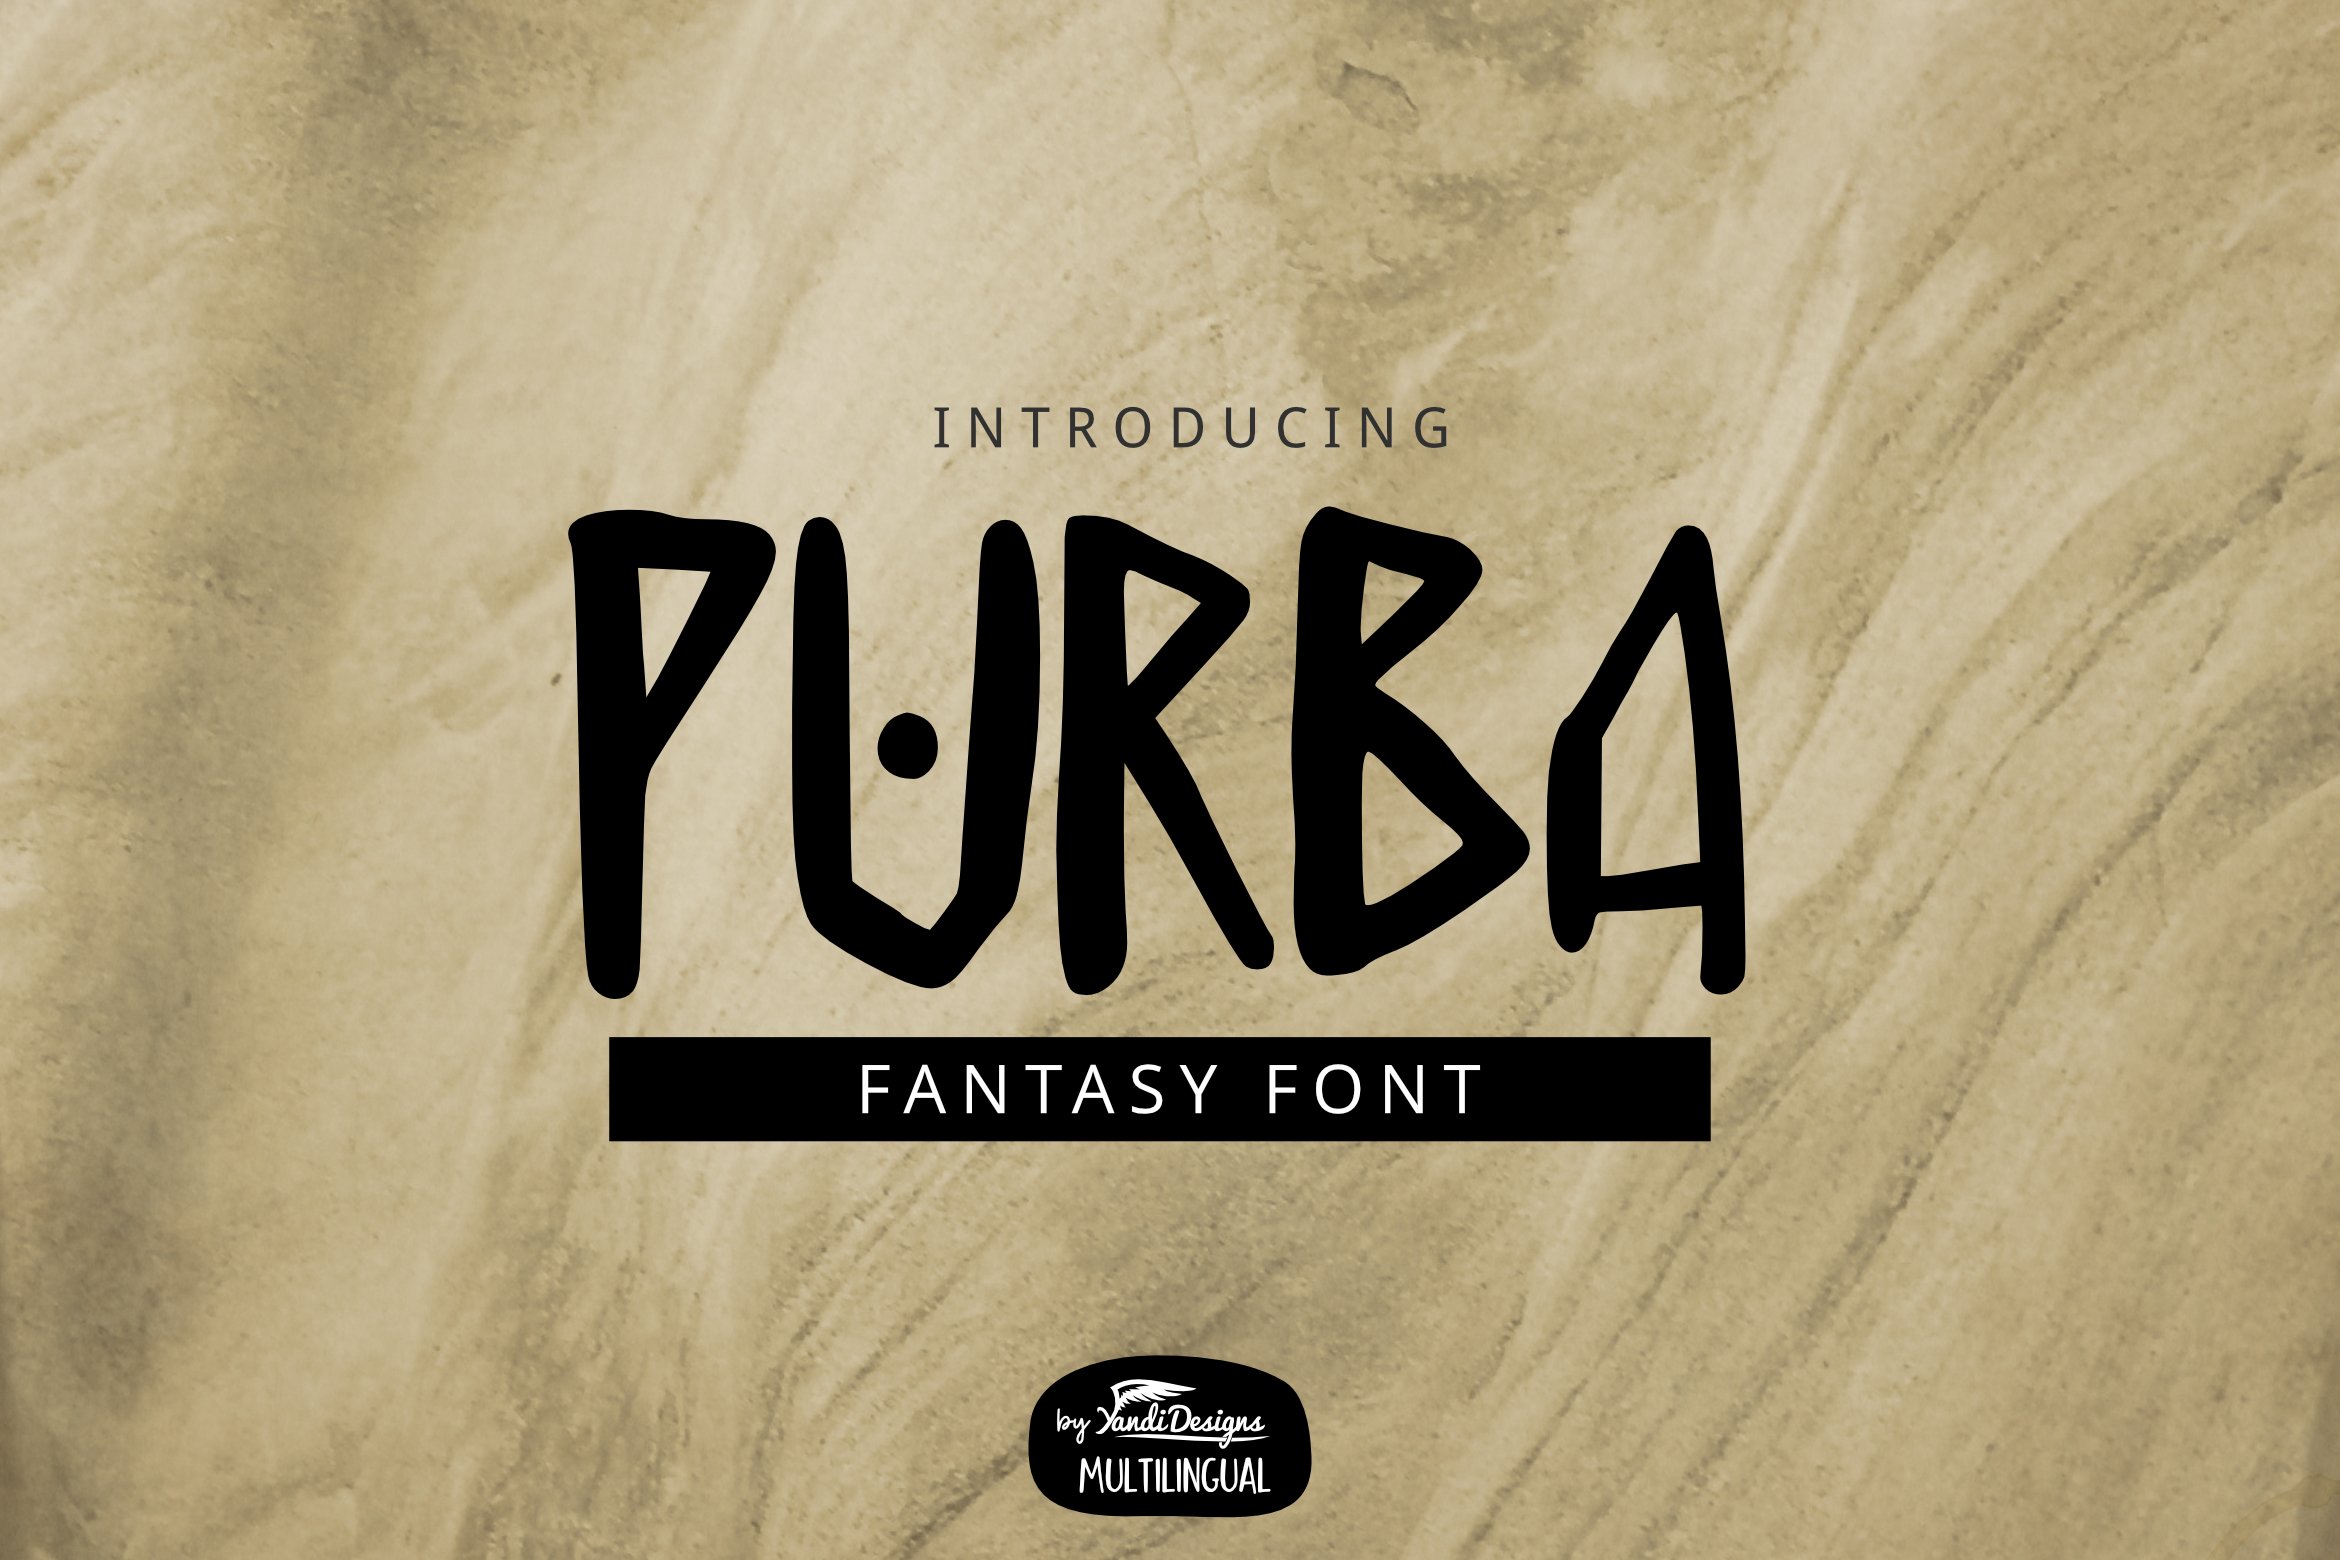 Purba Font cover image.